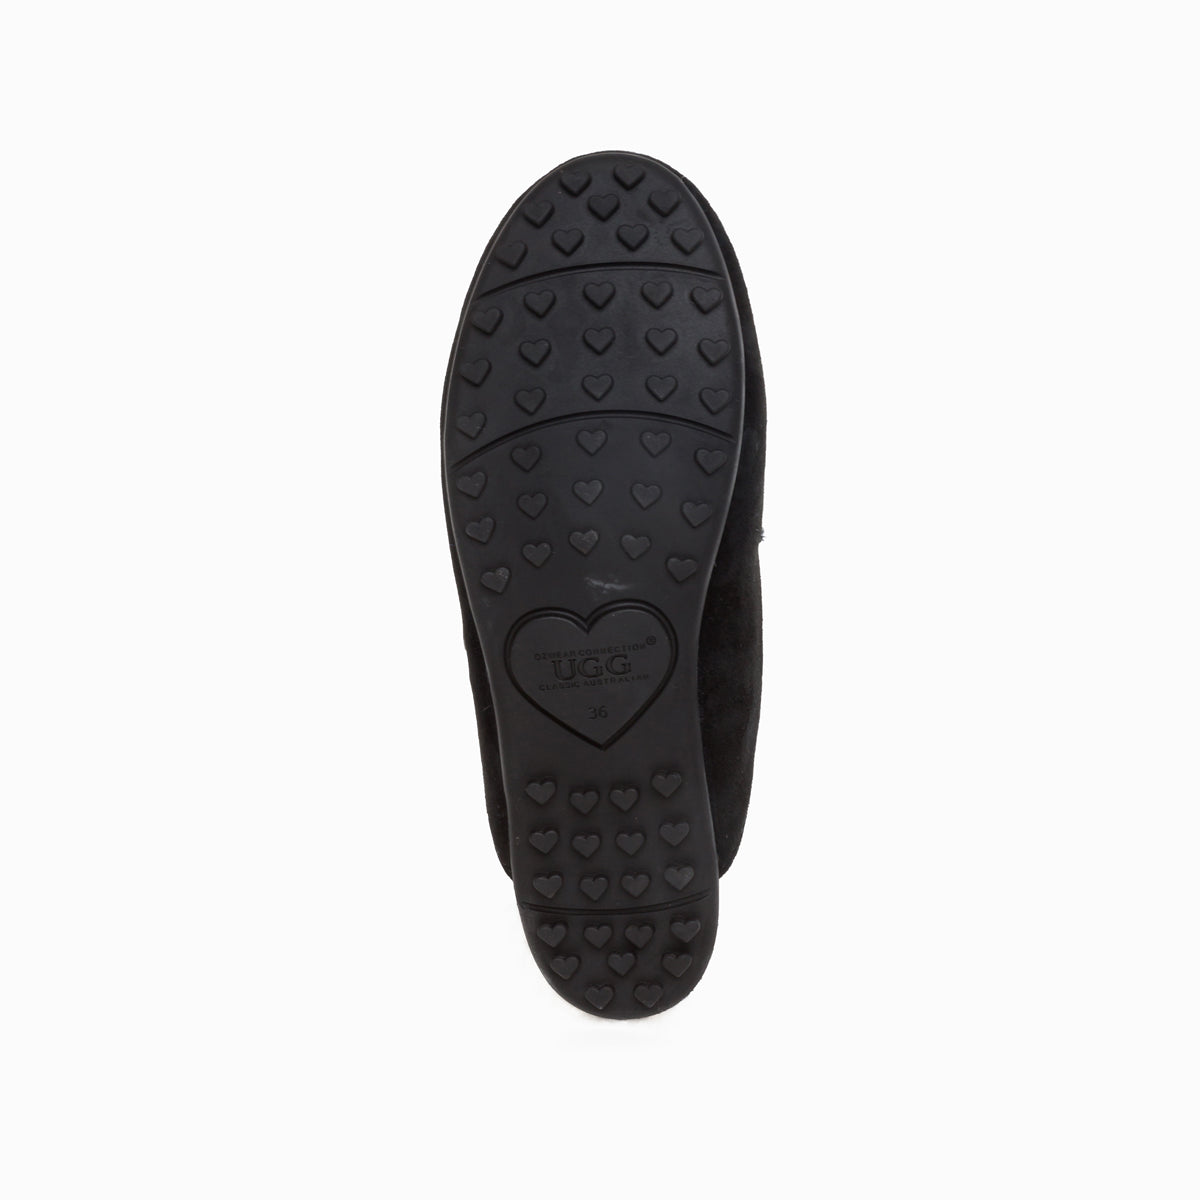 Ugg Eva Love Heart Slipper-Slippers-PEROZ Accessories